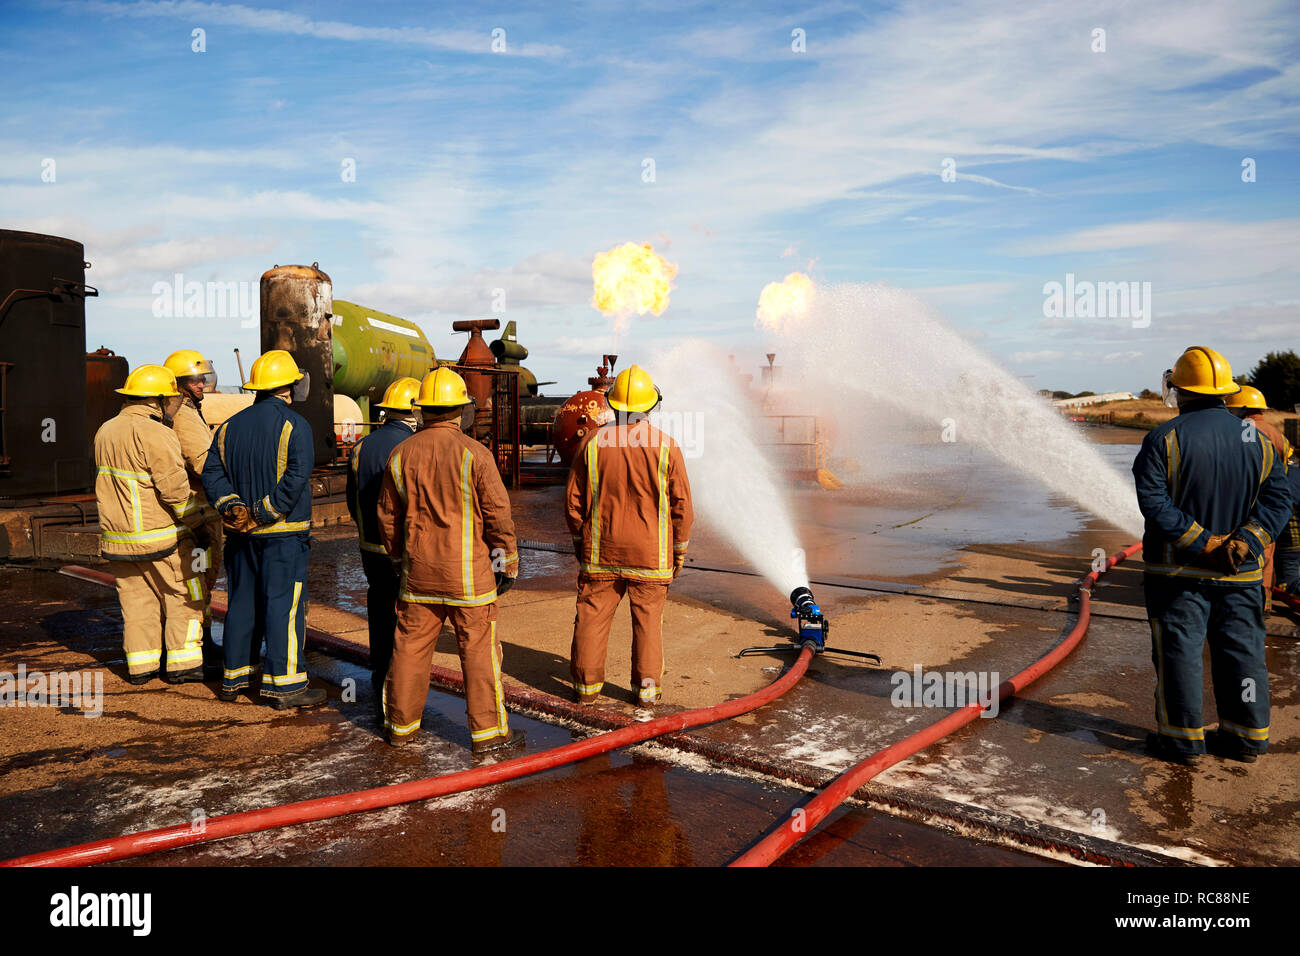 Firemen training to put out fire on burning tanks, Darlington, UK Stock Photo